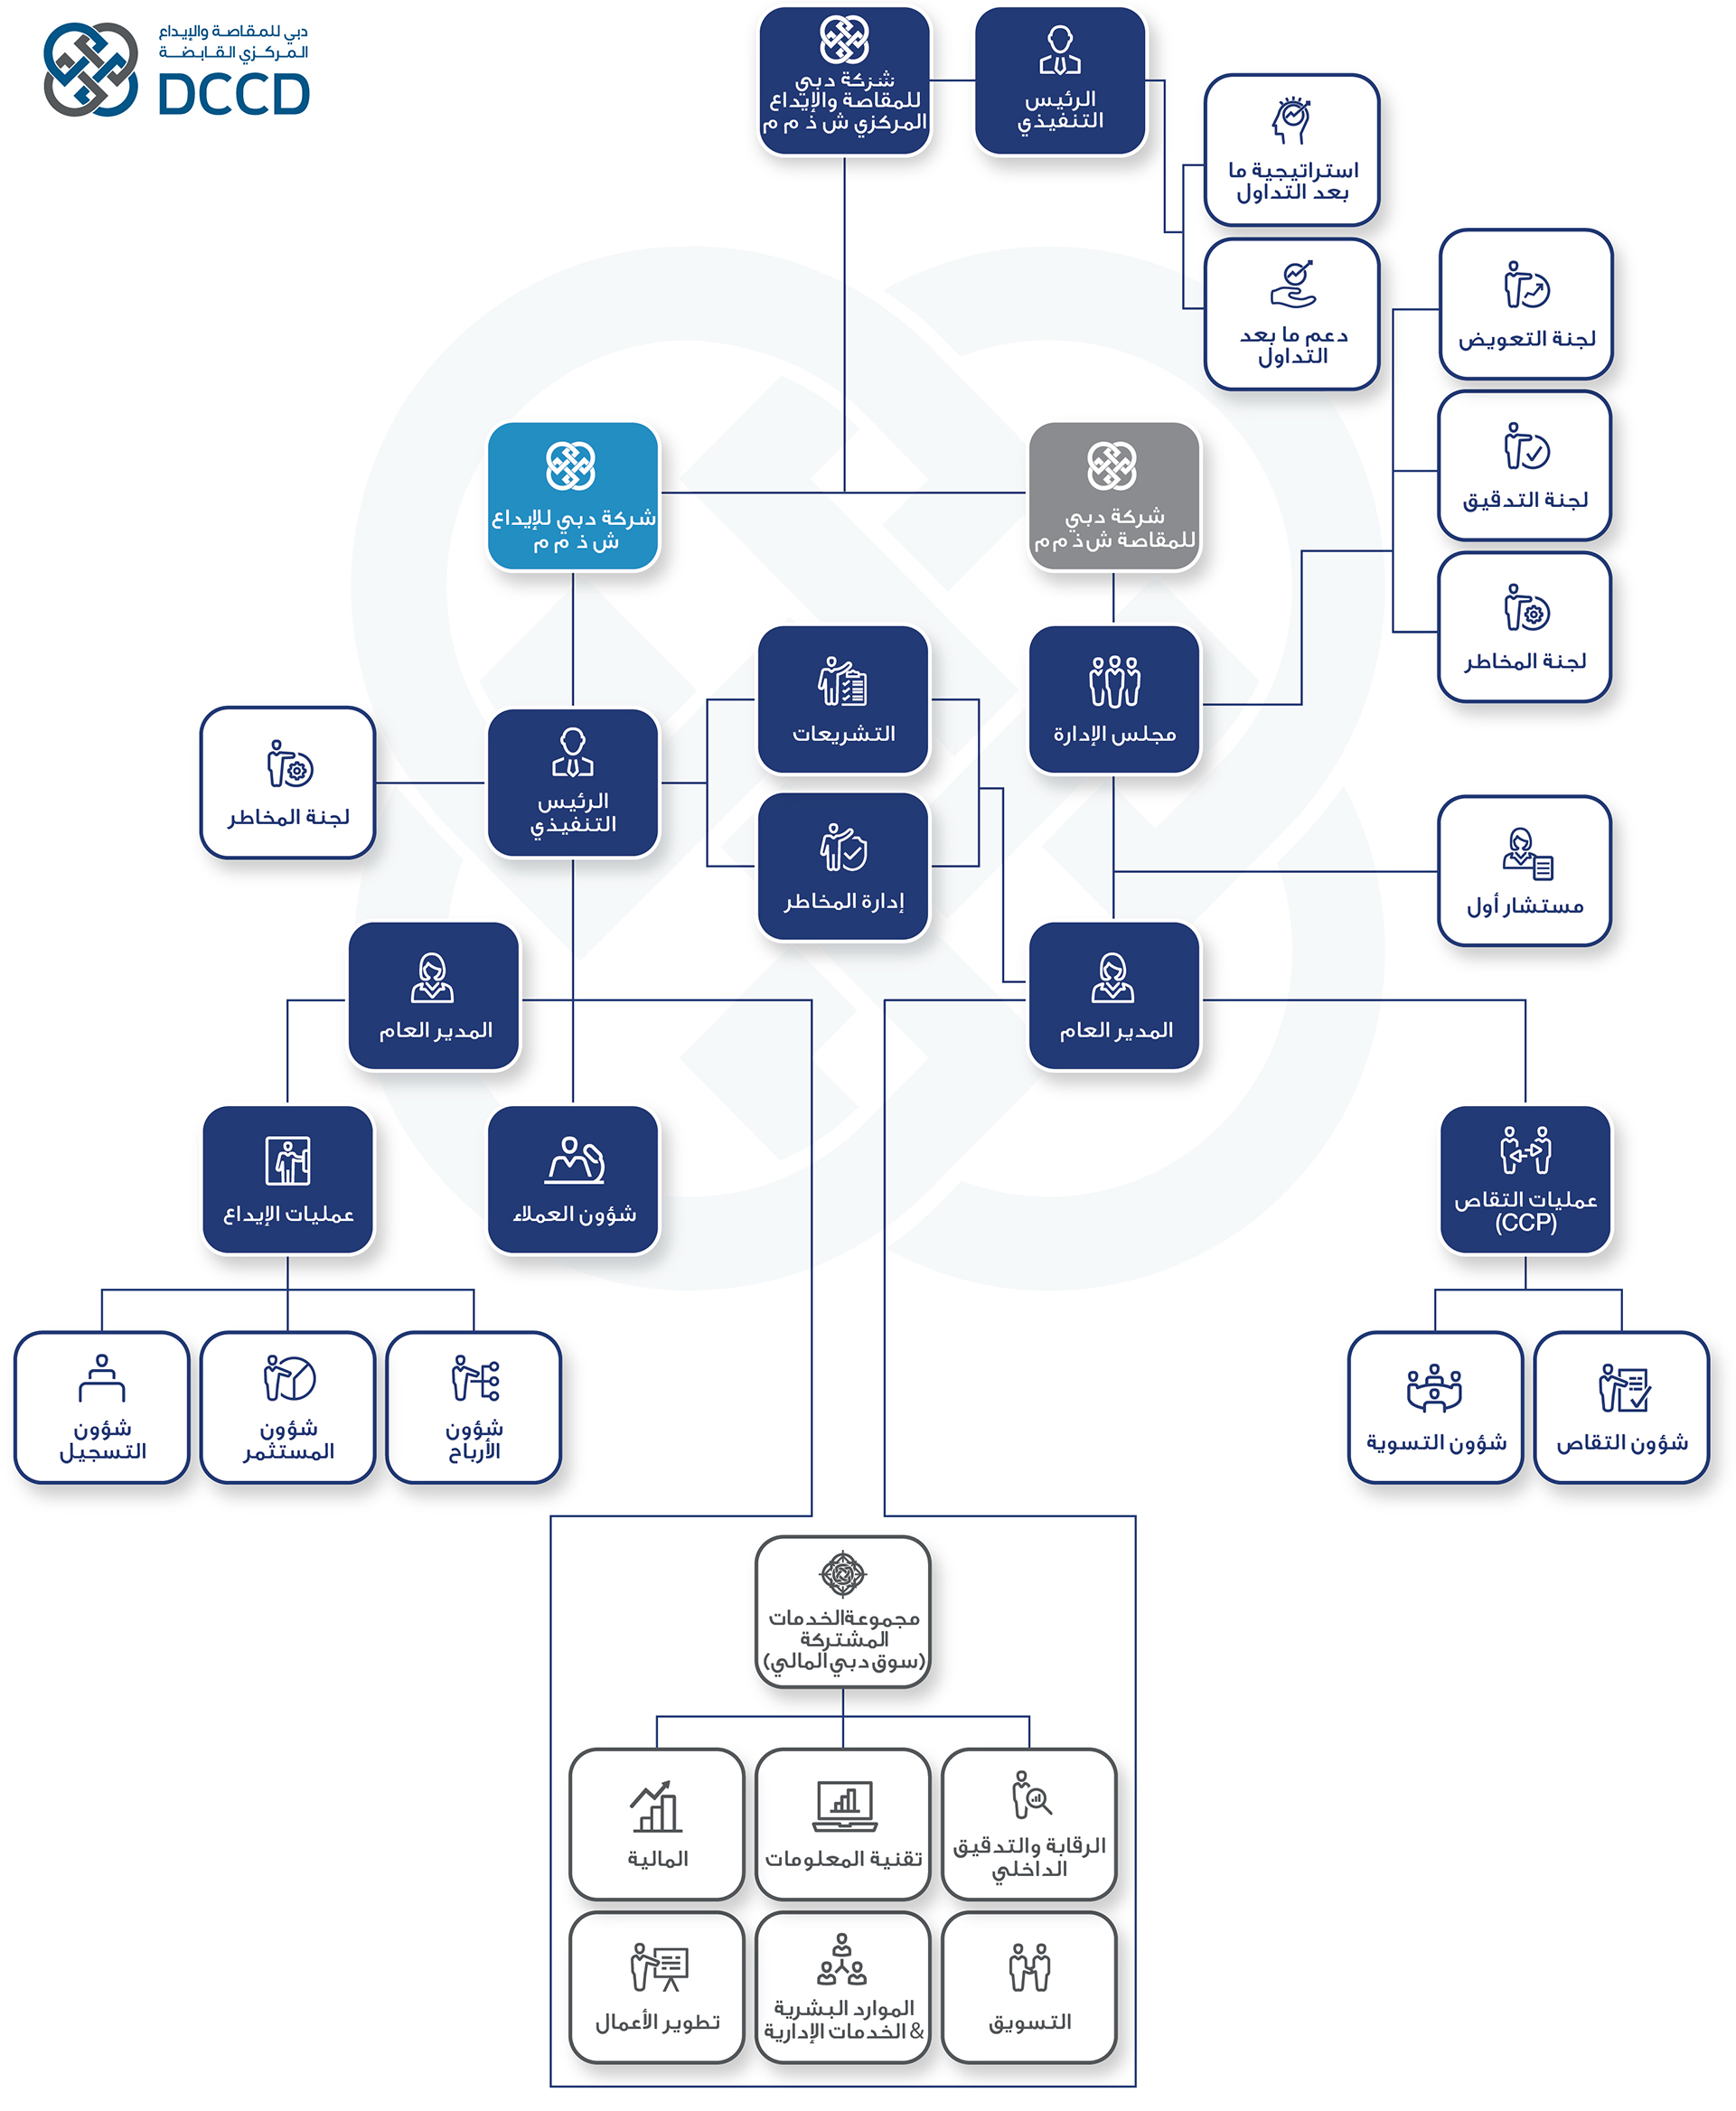 DCCD Organizational Structure